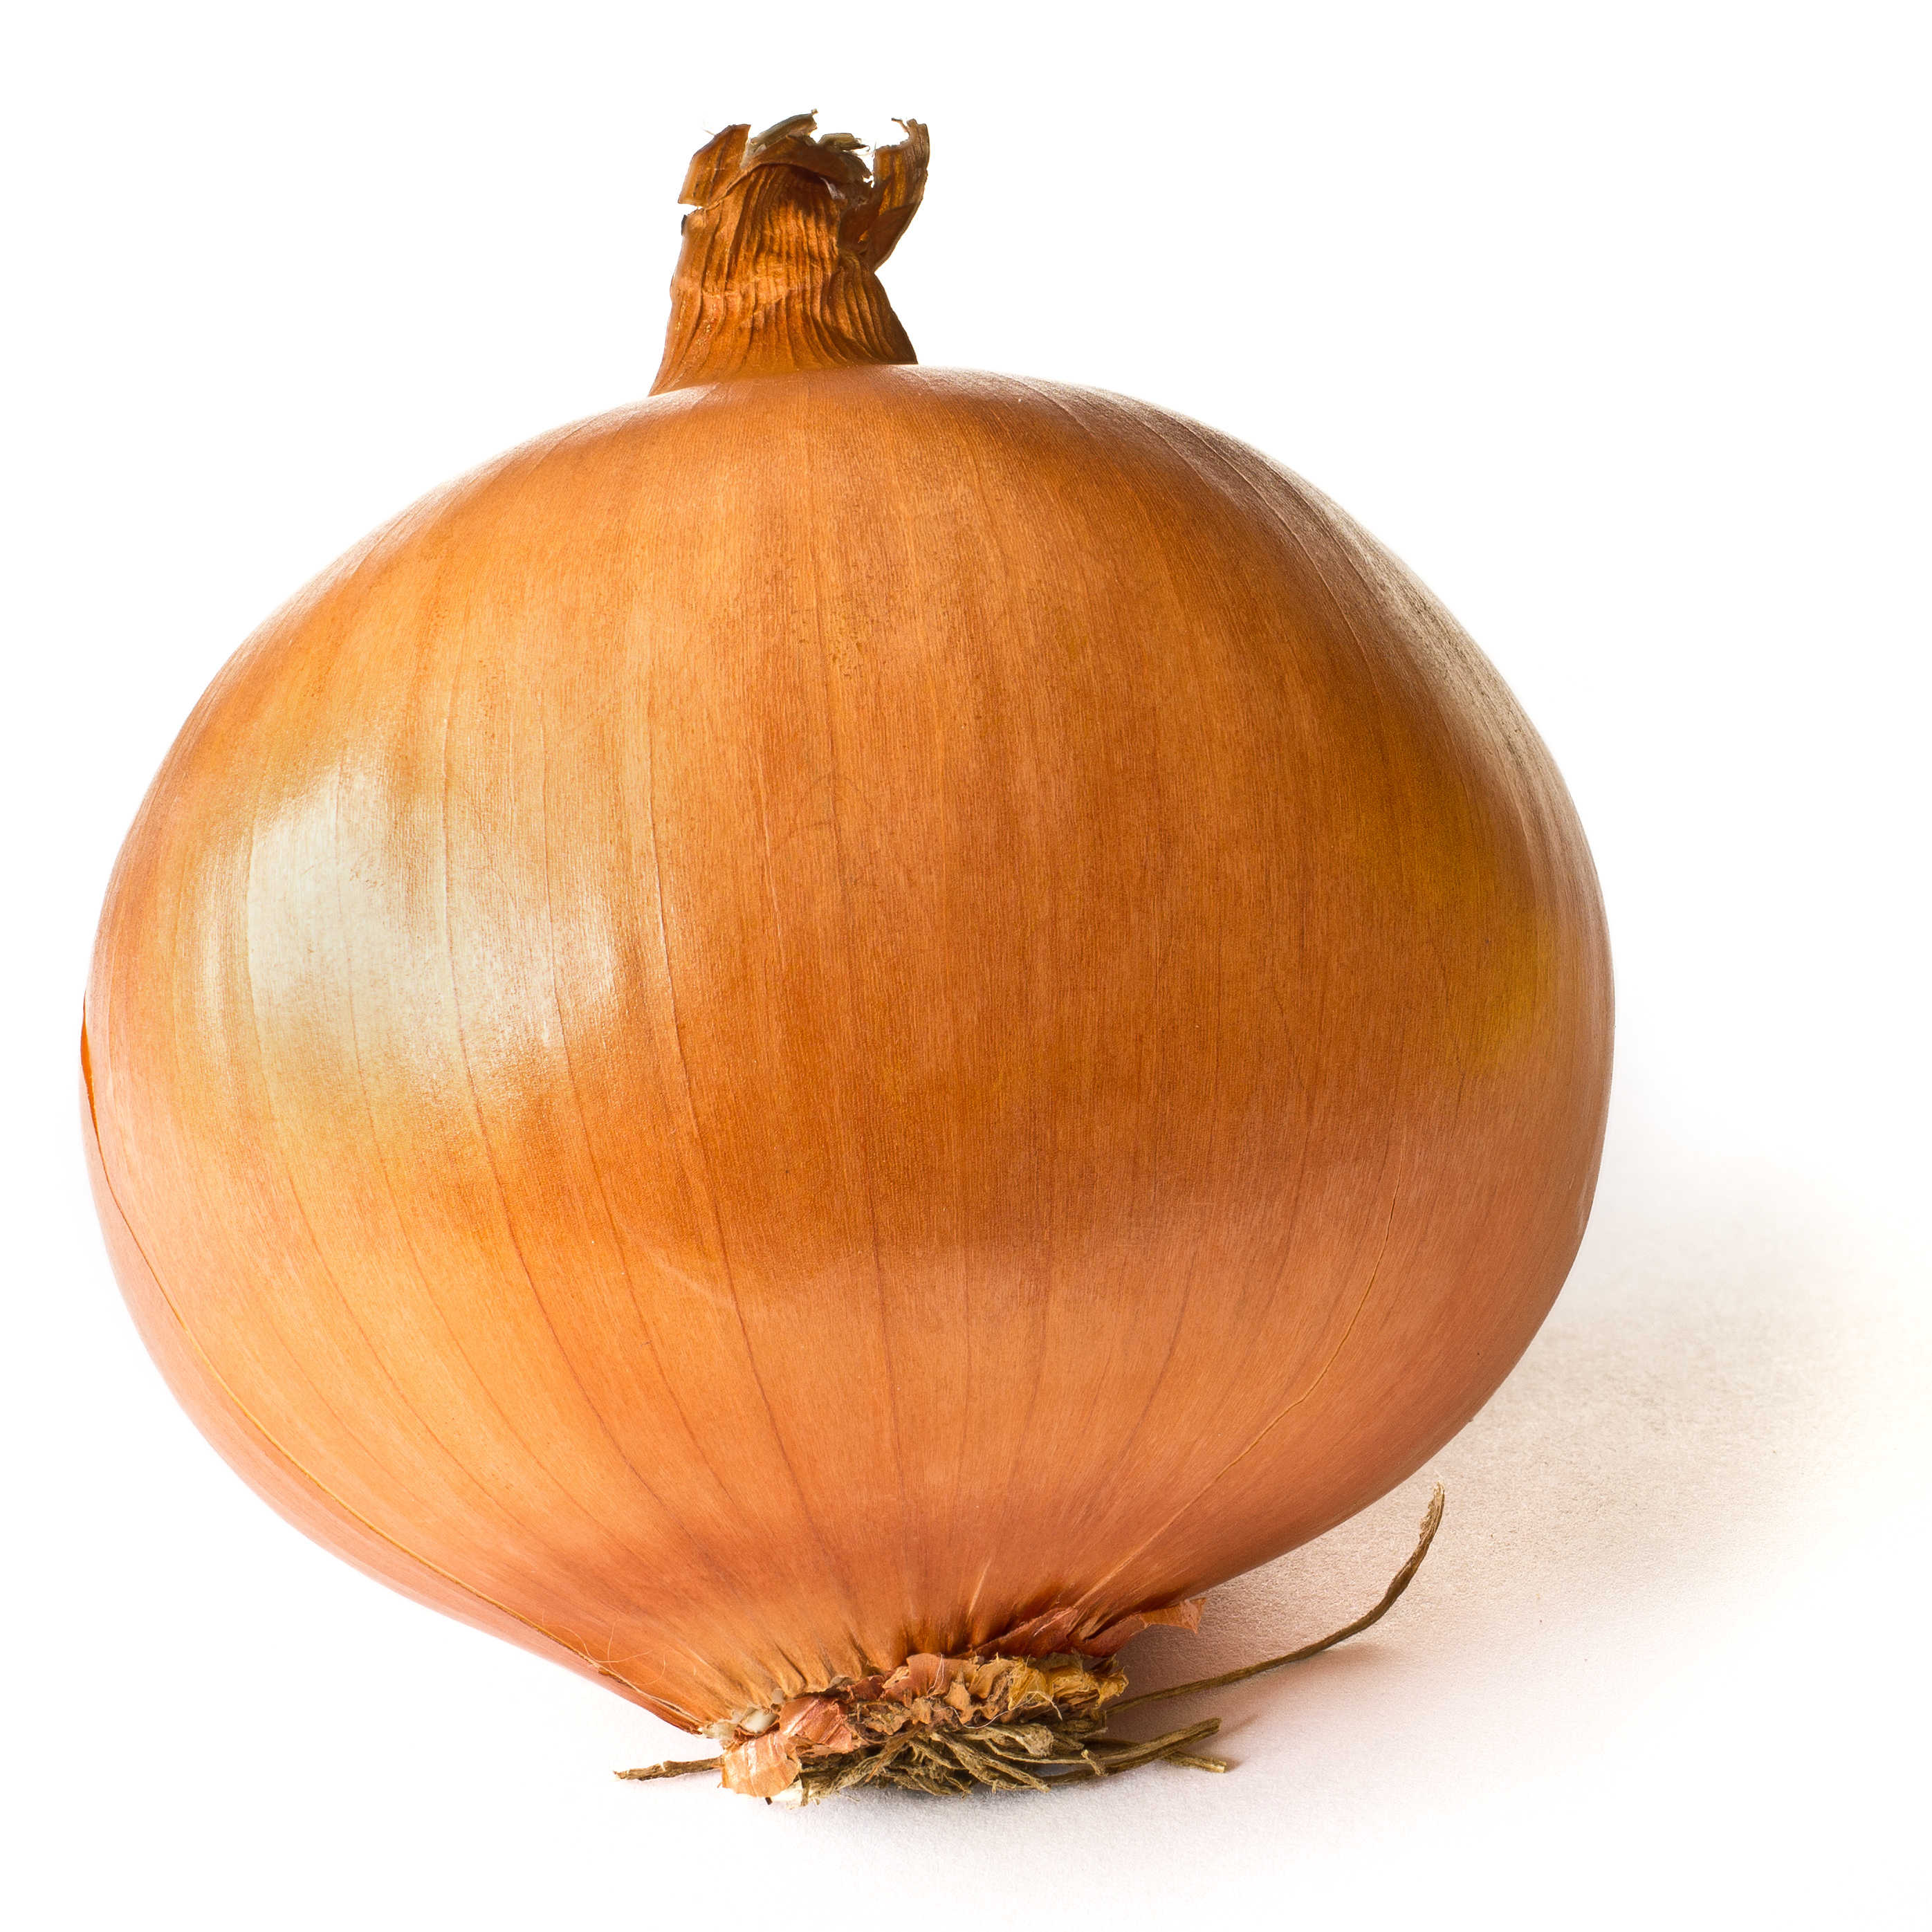 File:Onion on White.JPG - Wikimedia Commons